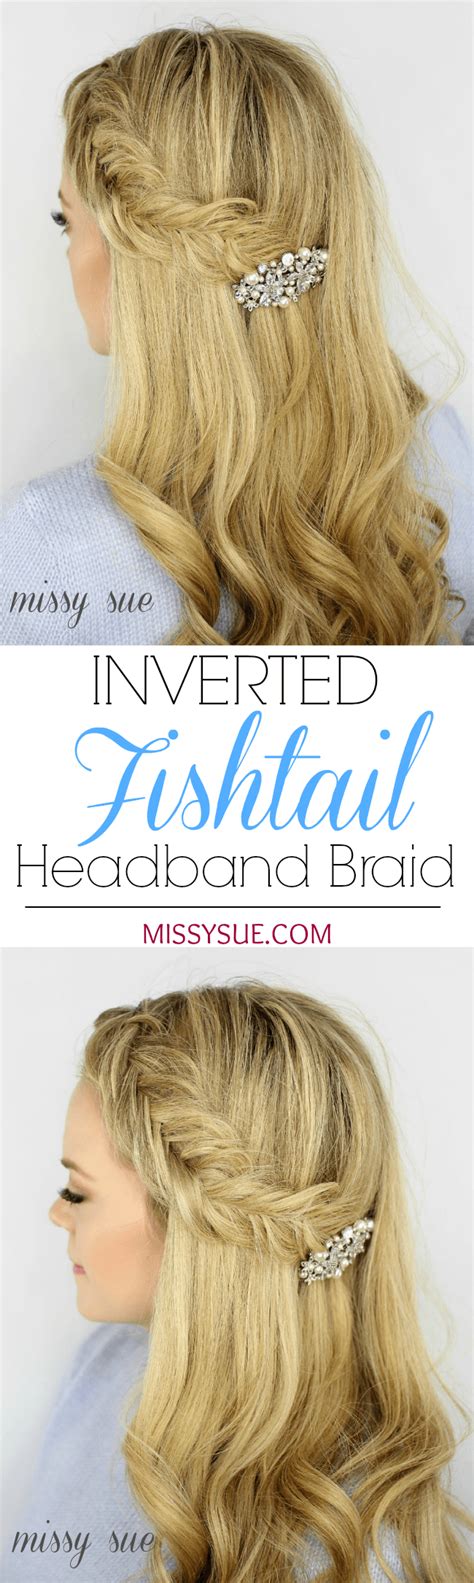 Dutch Fishtail Headband Braid